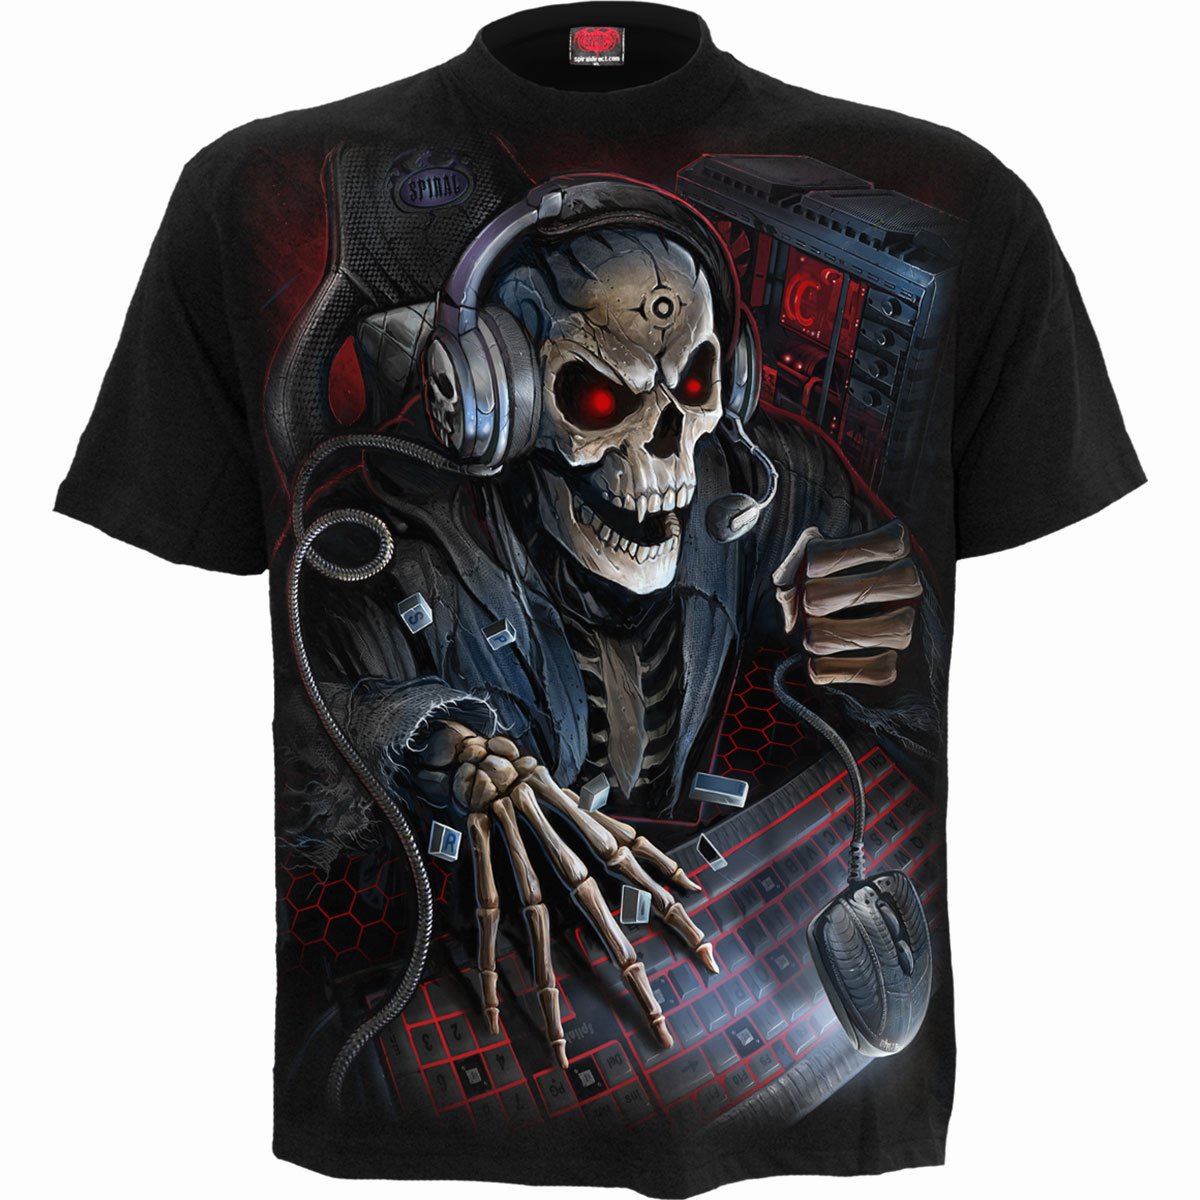 PC GAMER - Kids T-Shirt Black